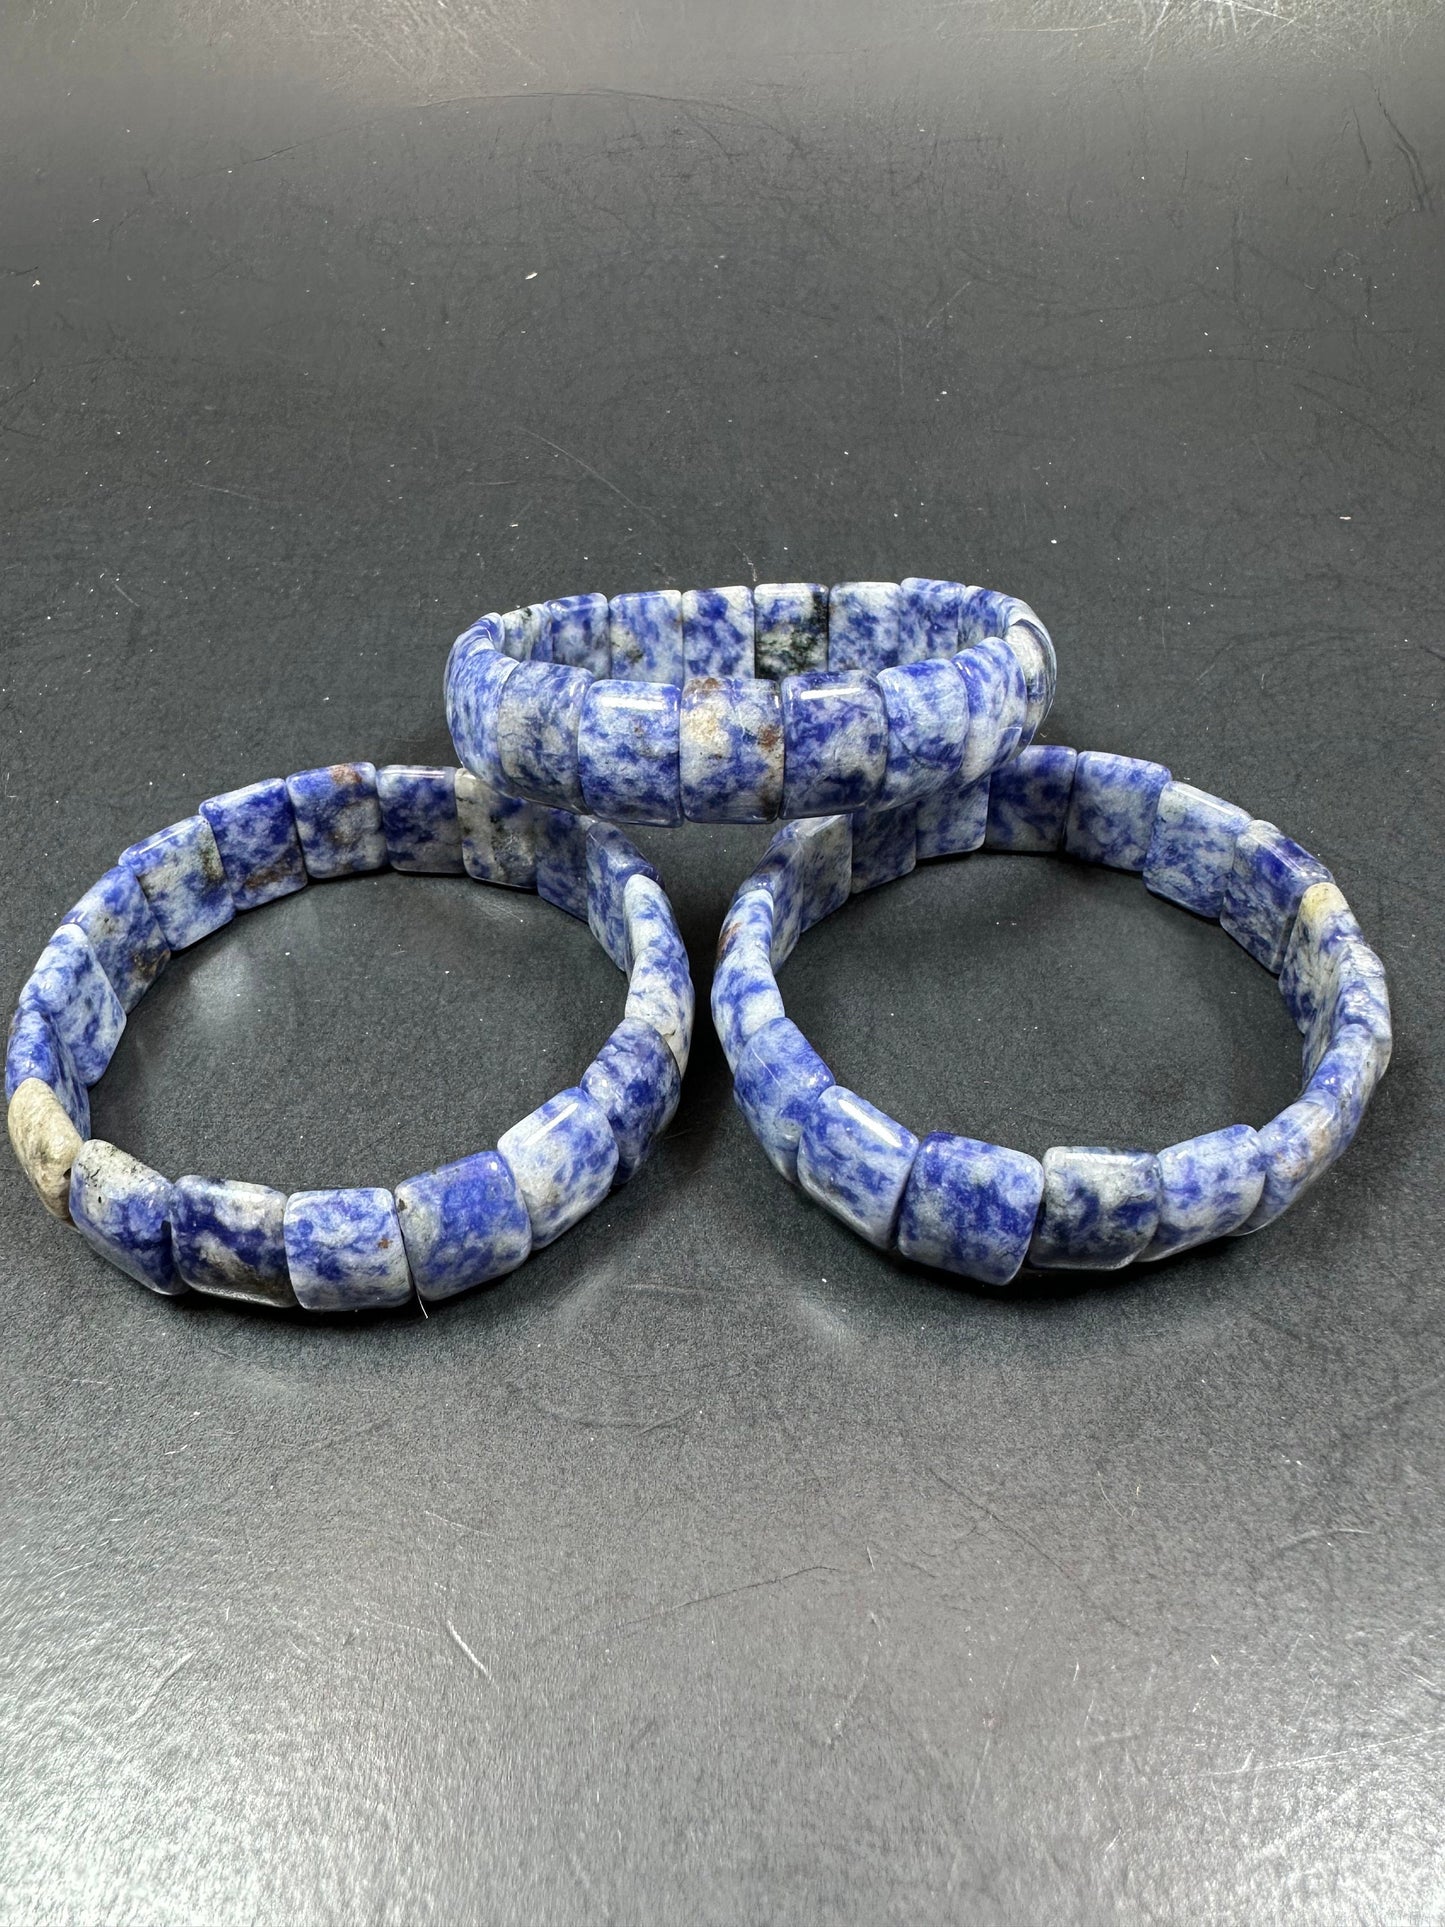 Beautiful Natural Sodalite Bangle 14x10 Rectangle Shape Gemstone Bracelet. Gorgeous Blue Color Bead. High Quality Sodalite Unique Bangle